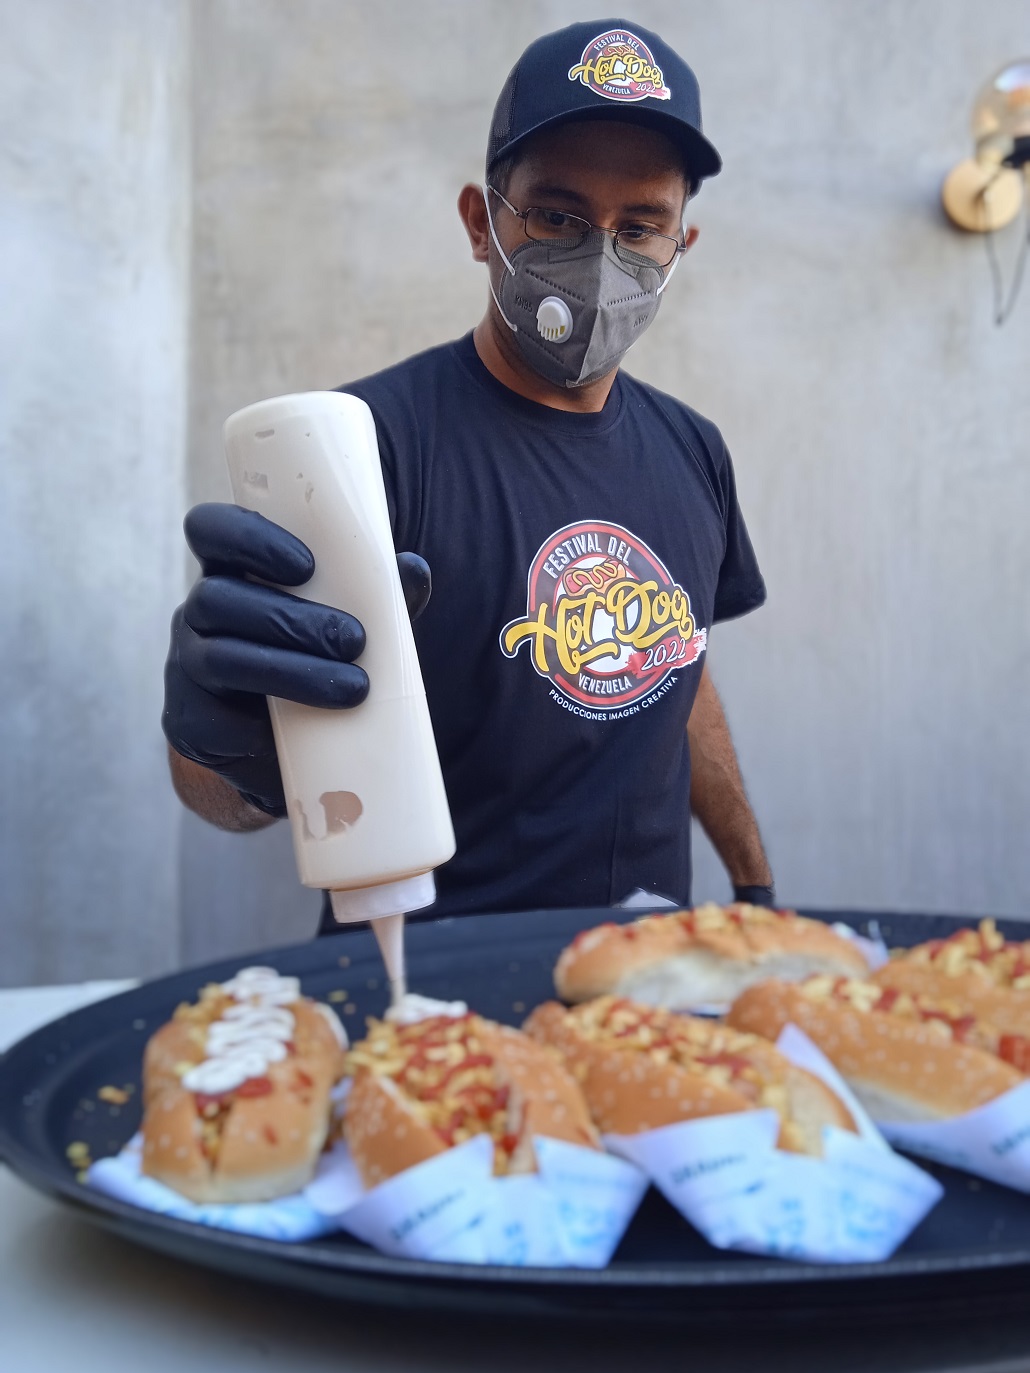 Festival del Hot Dog premiará a estudiantes de bachillerato que propongan recetas novedosas